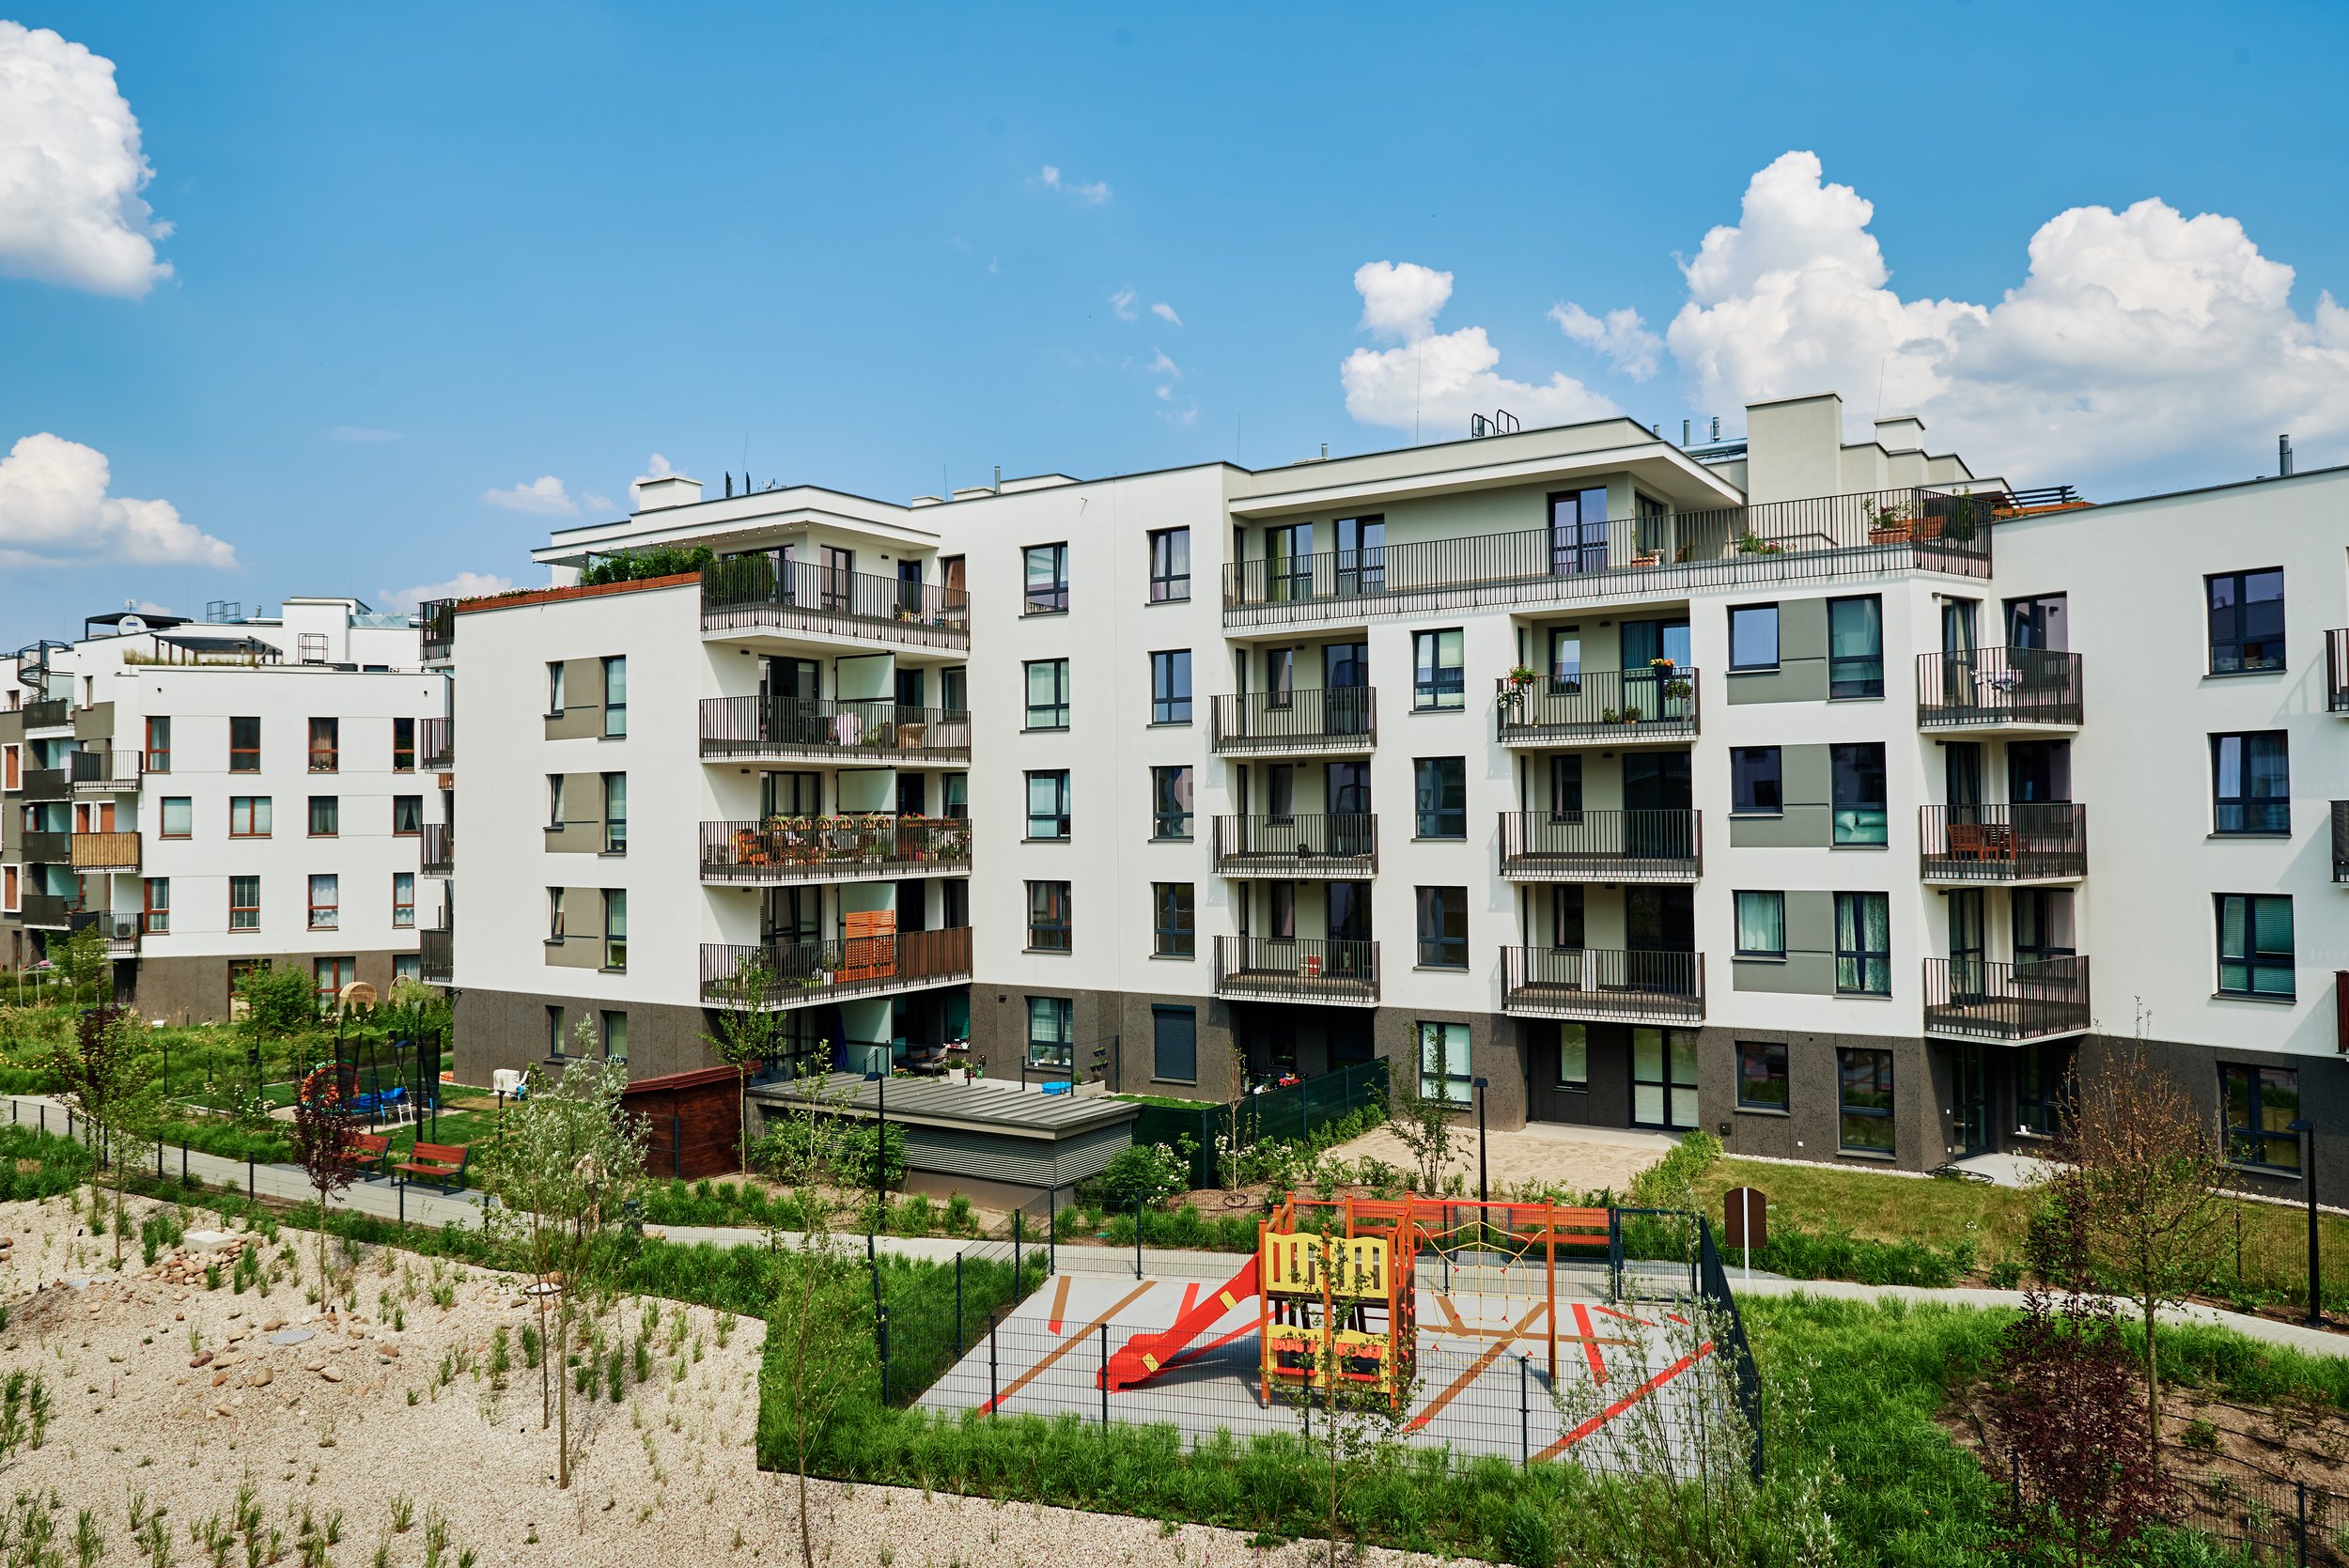 new-modern-complex-of-residential-appartment-in-eu-2021-12-09-13-51-19-utc.jpg